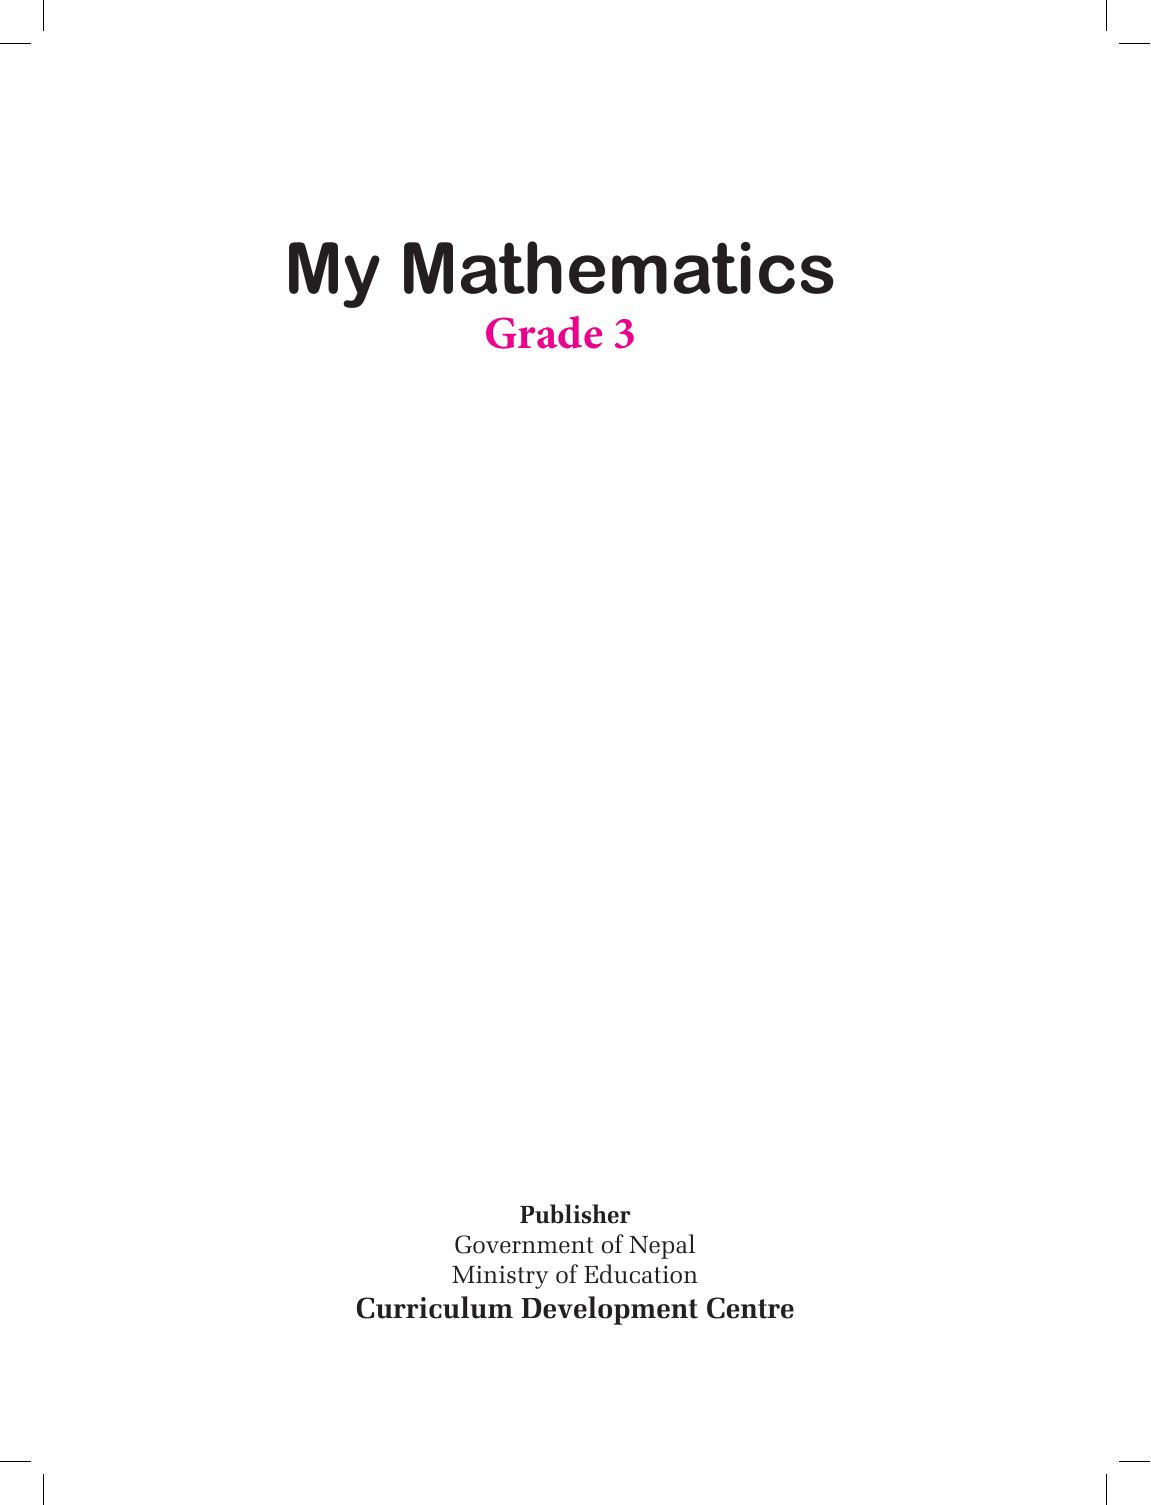 CDC 2074 - My Mathematics Grade 3